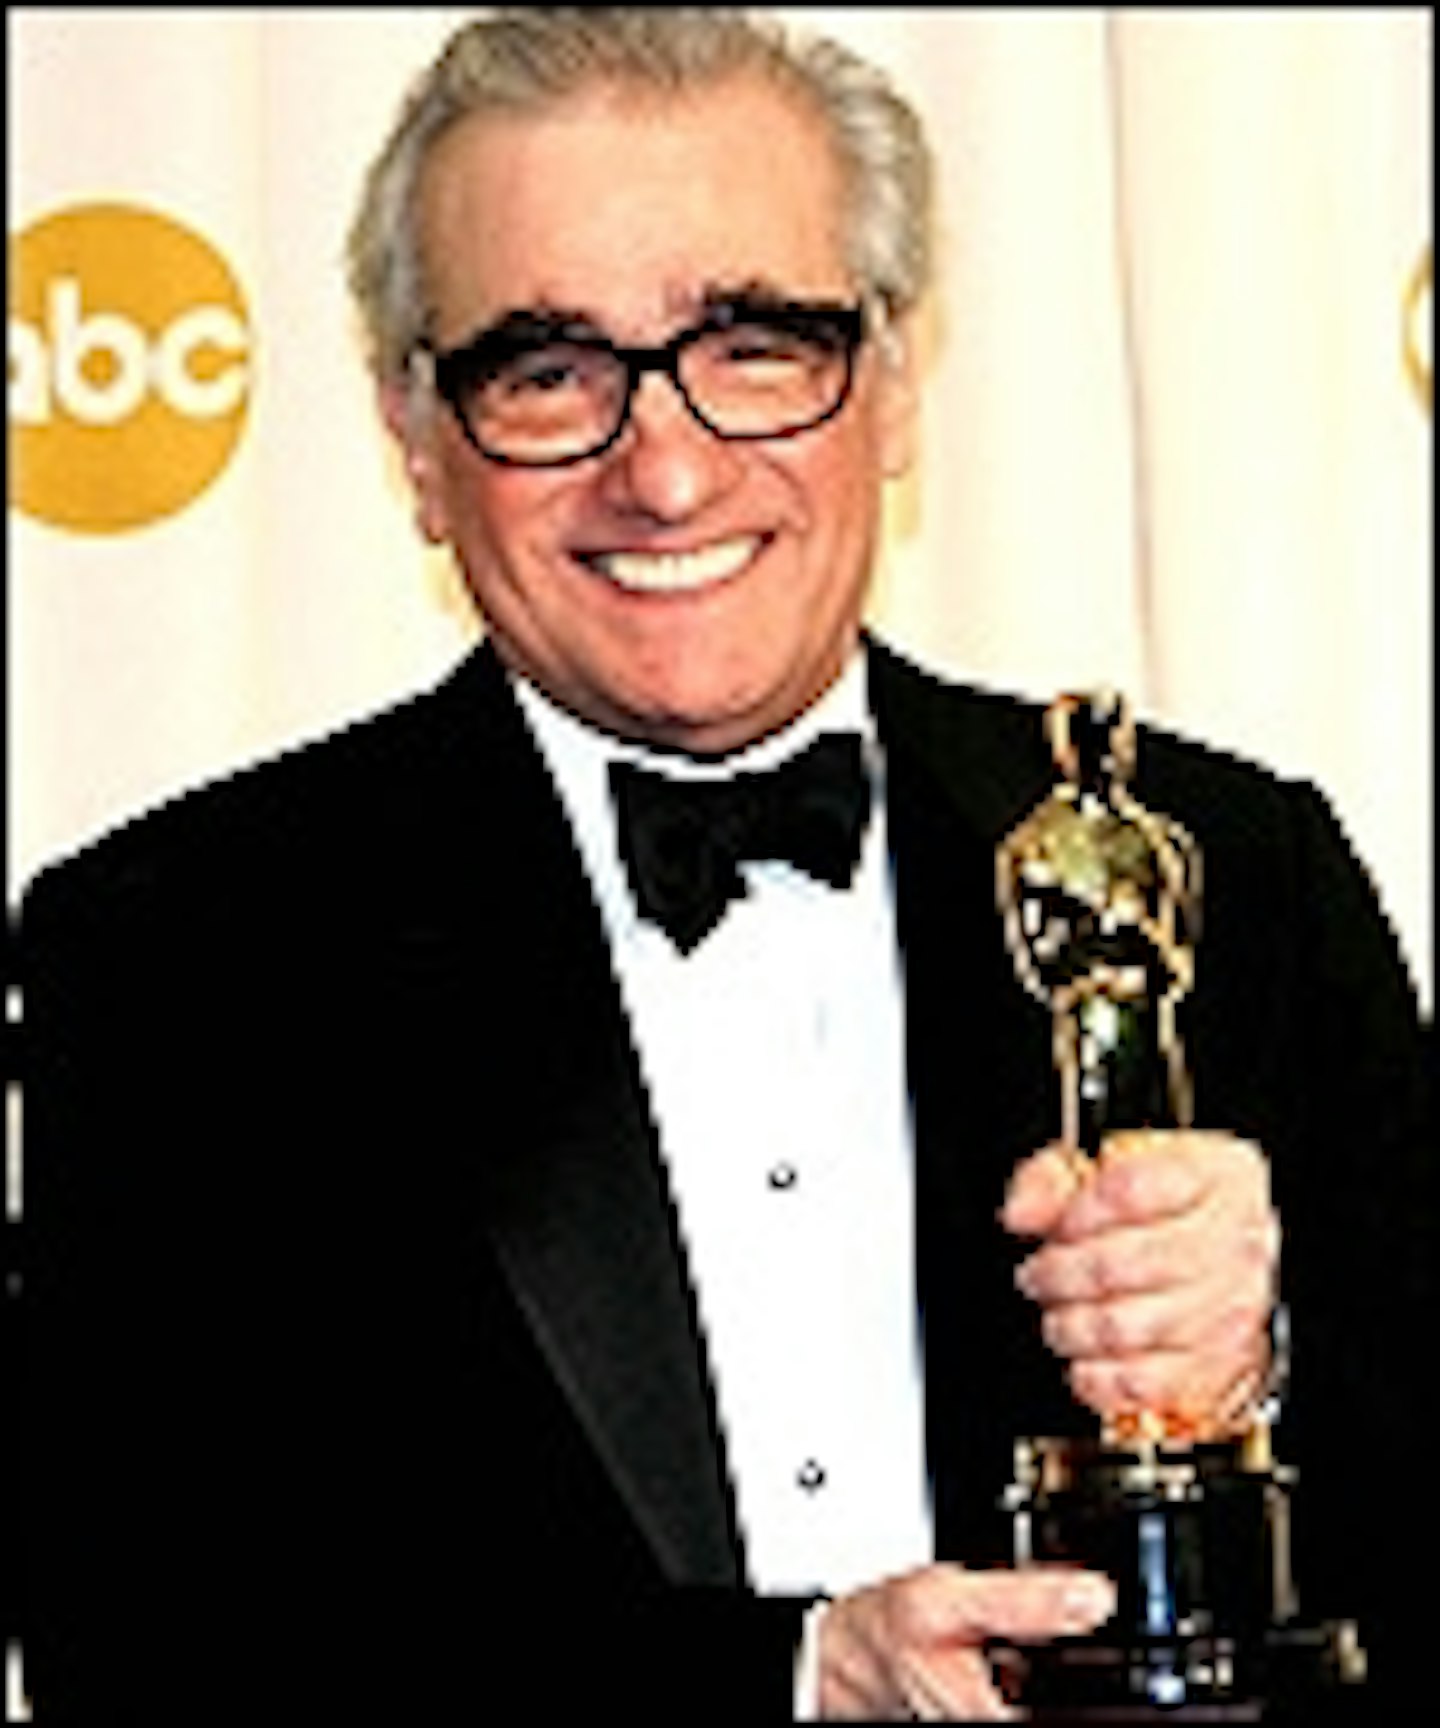 Scorsese Wins At Last!